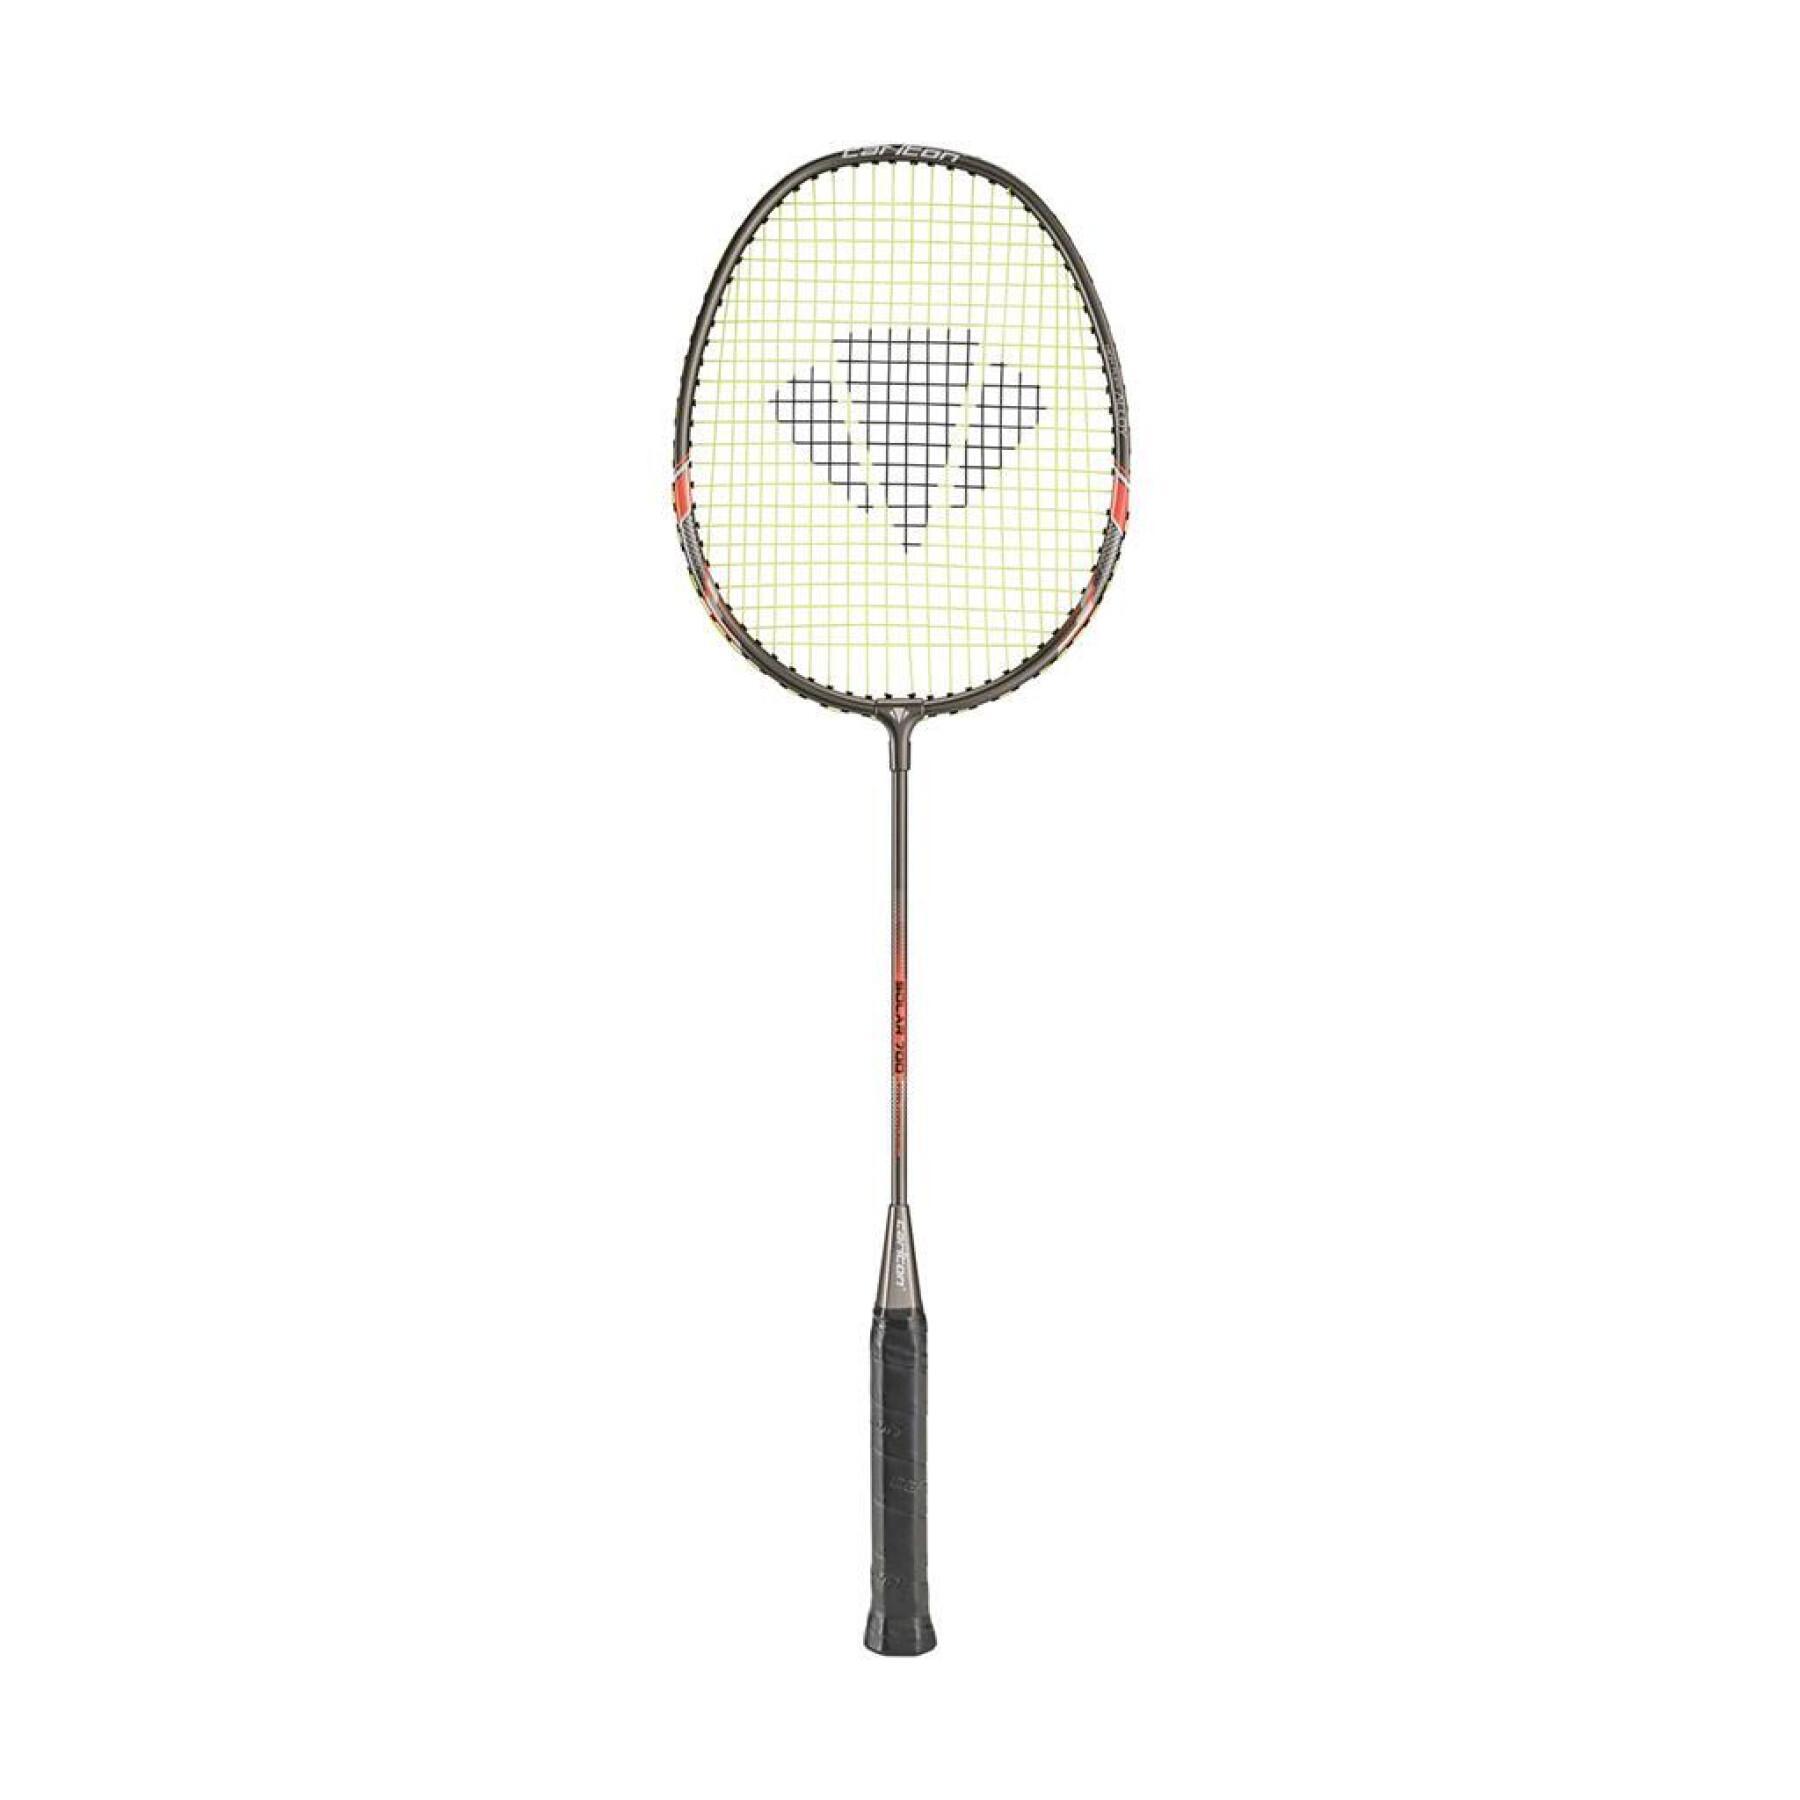 Badmintonracket Carlton Solar 700 Gry G3 Nf Eu